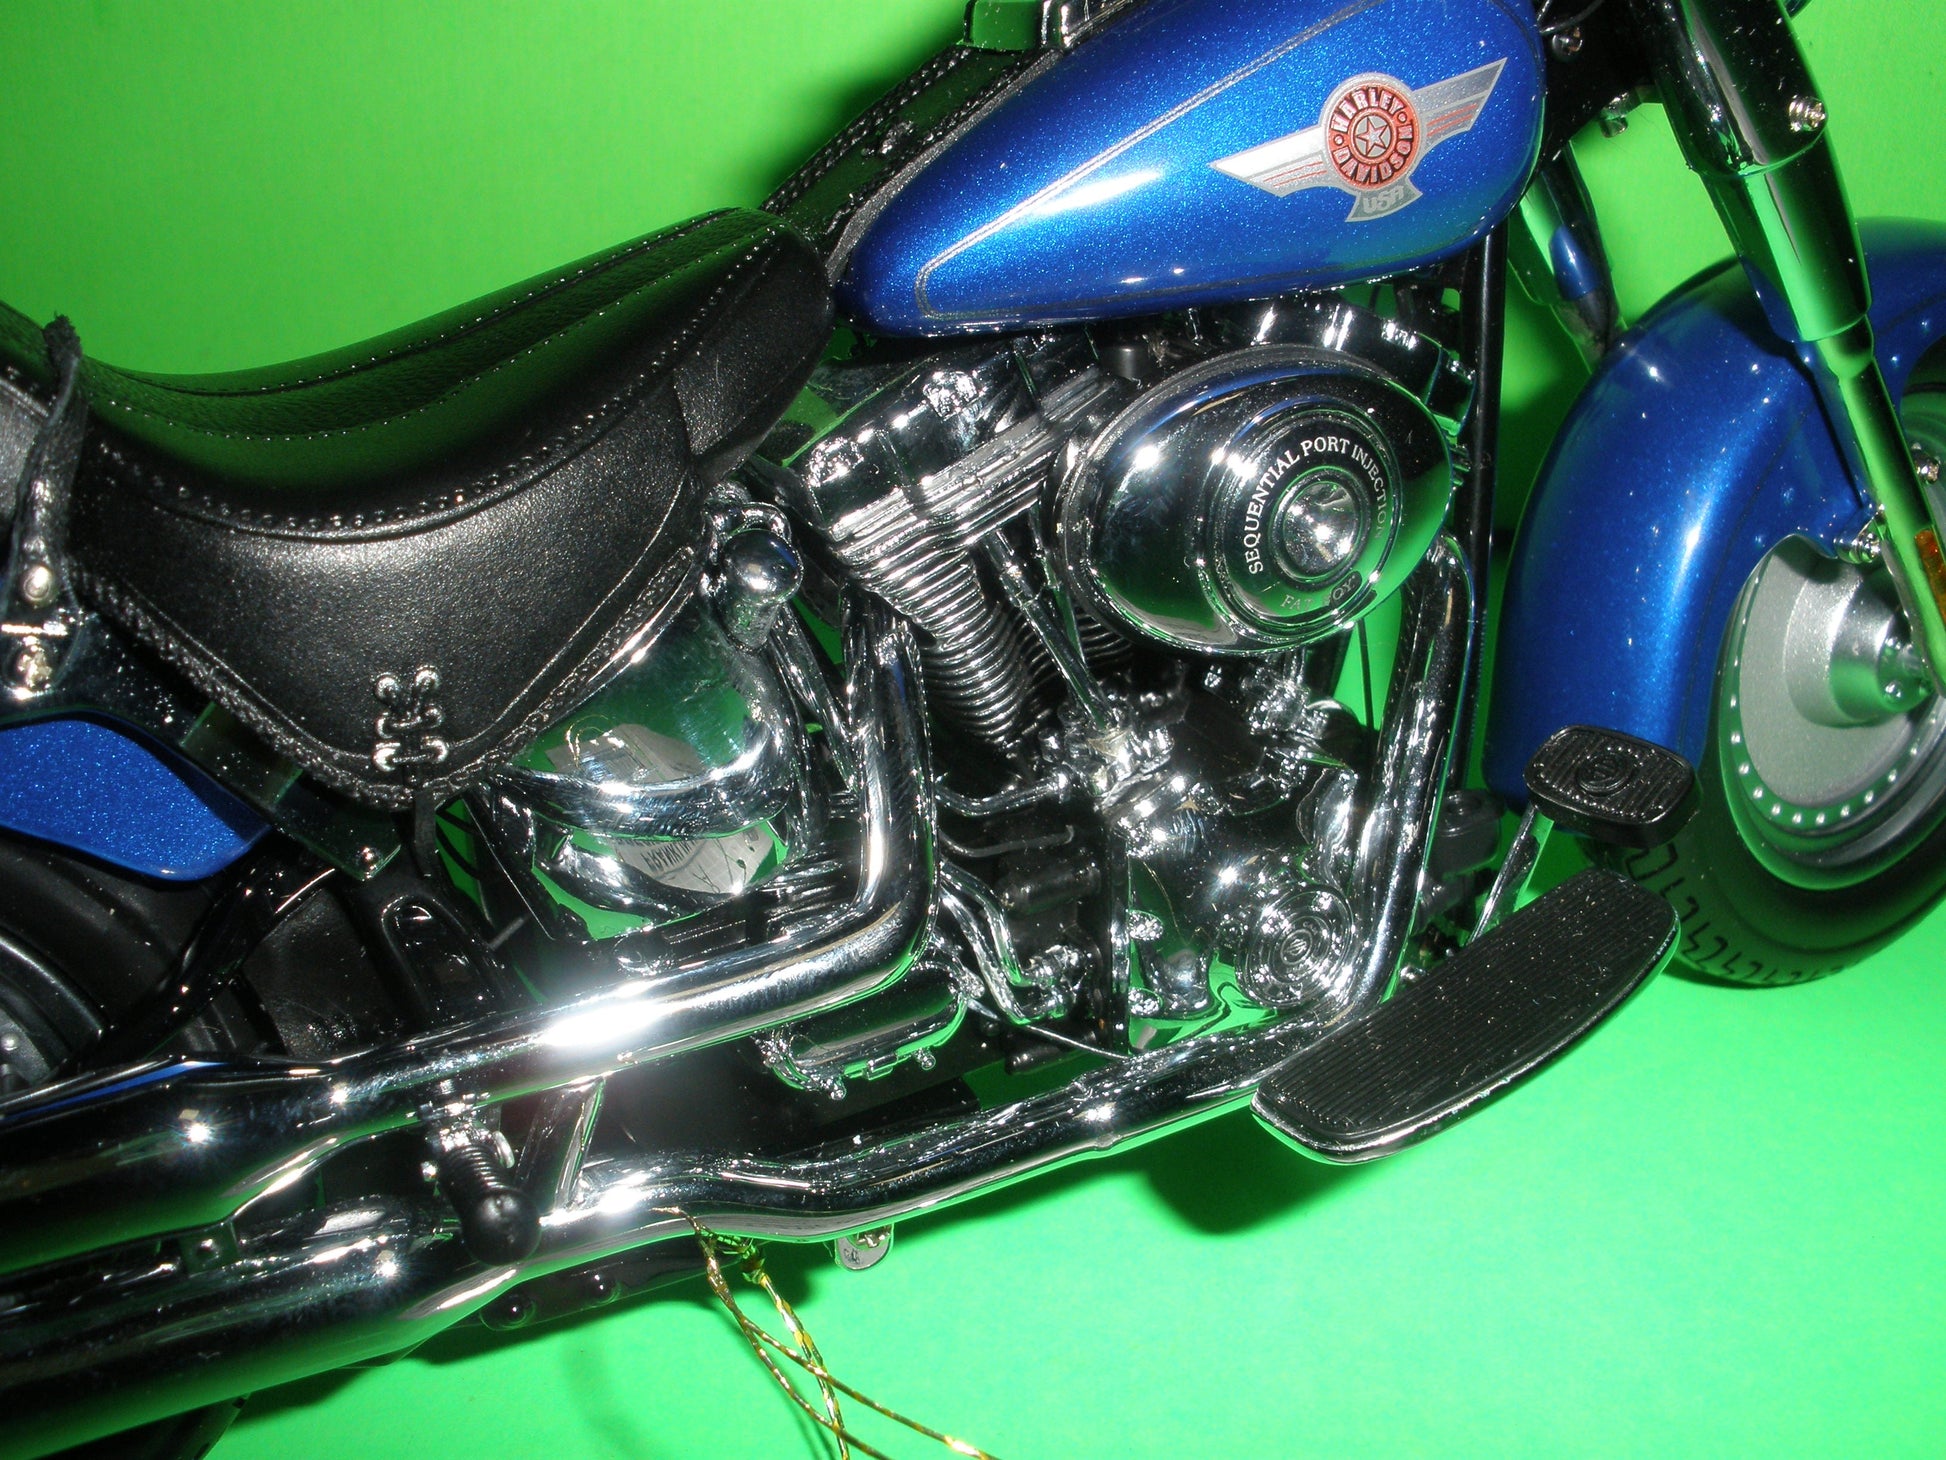 Harley Davidson 2006 Fat Boy Motorcycle - B11E266